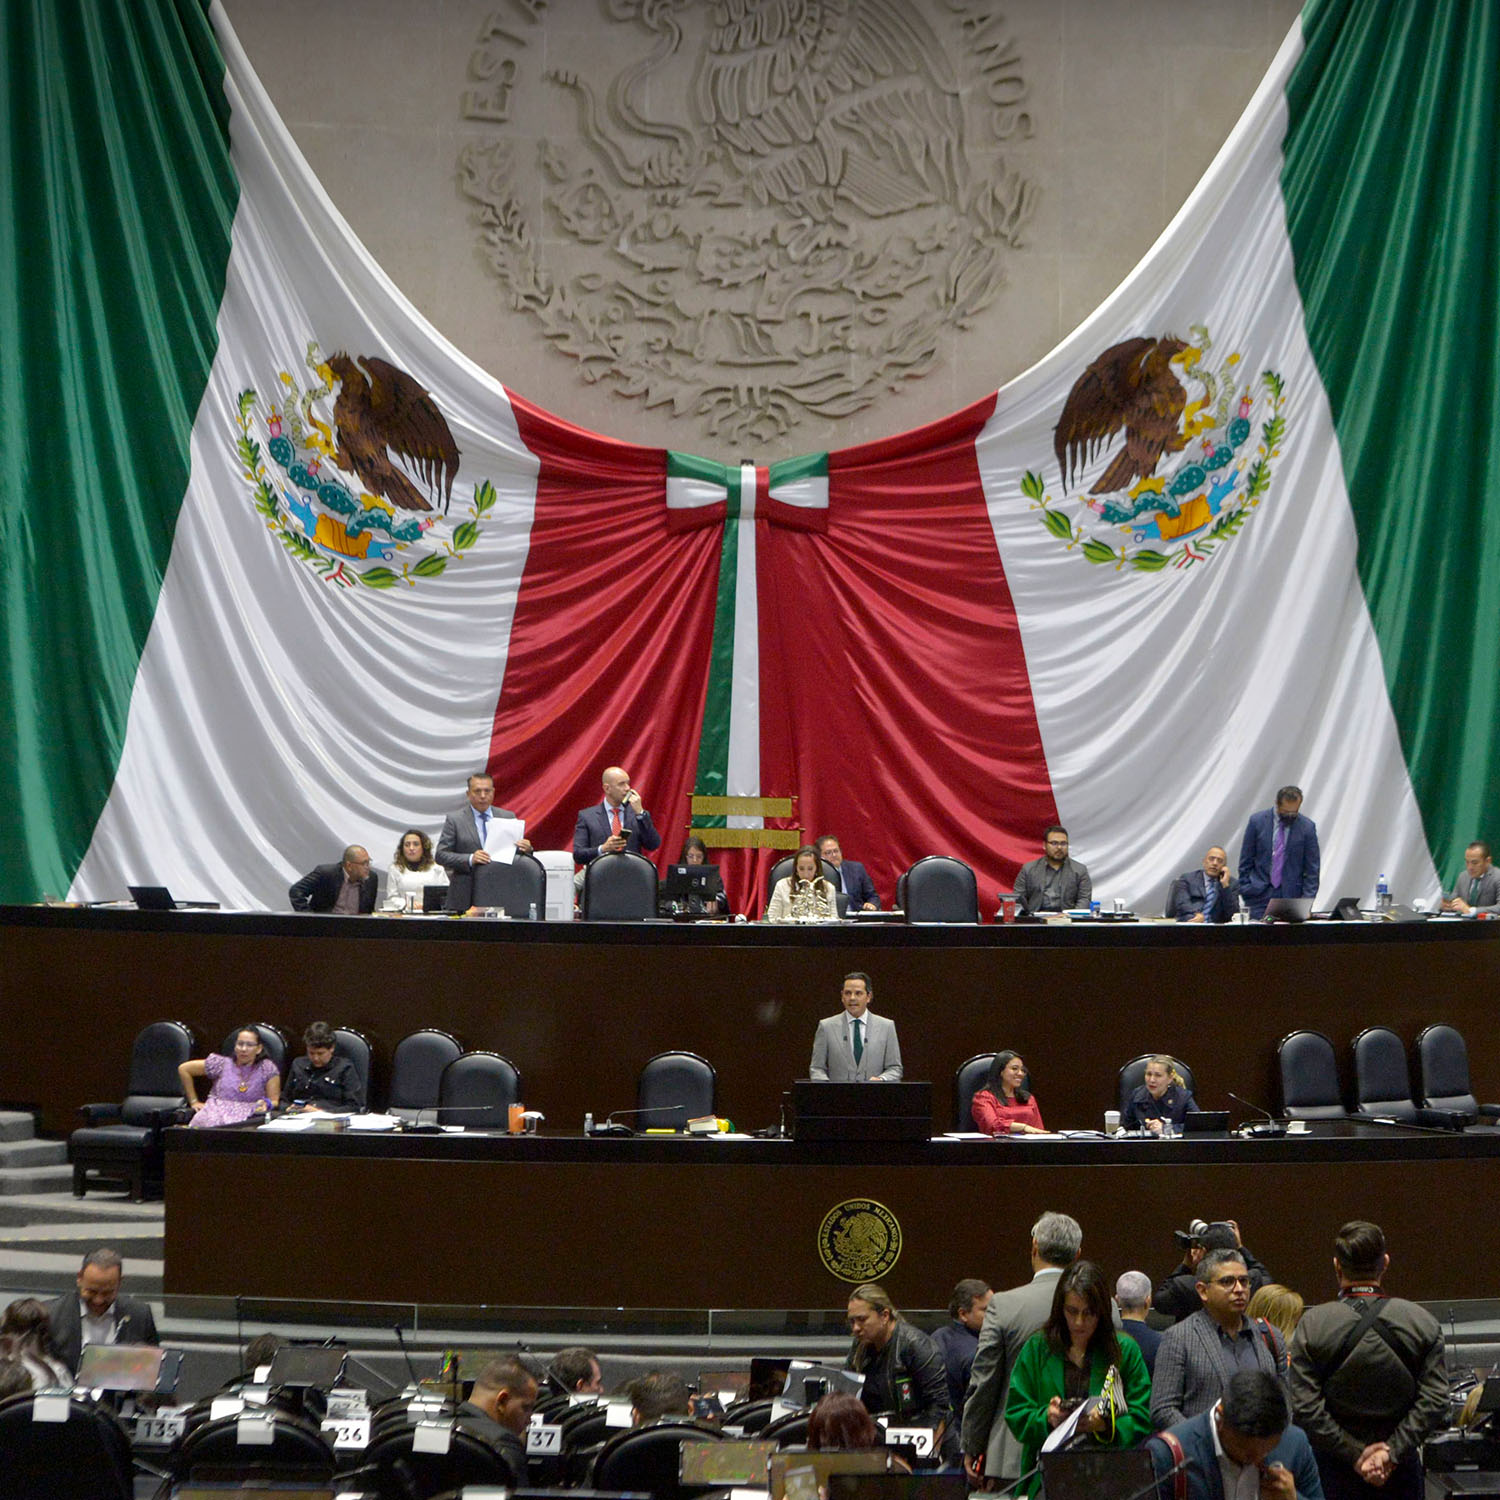 kongress in mexiko